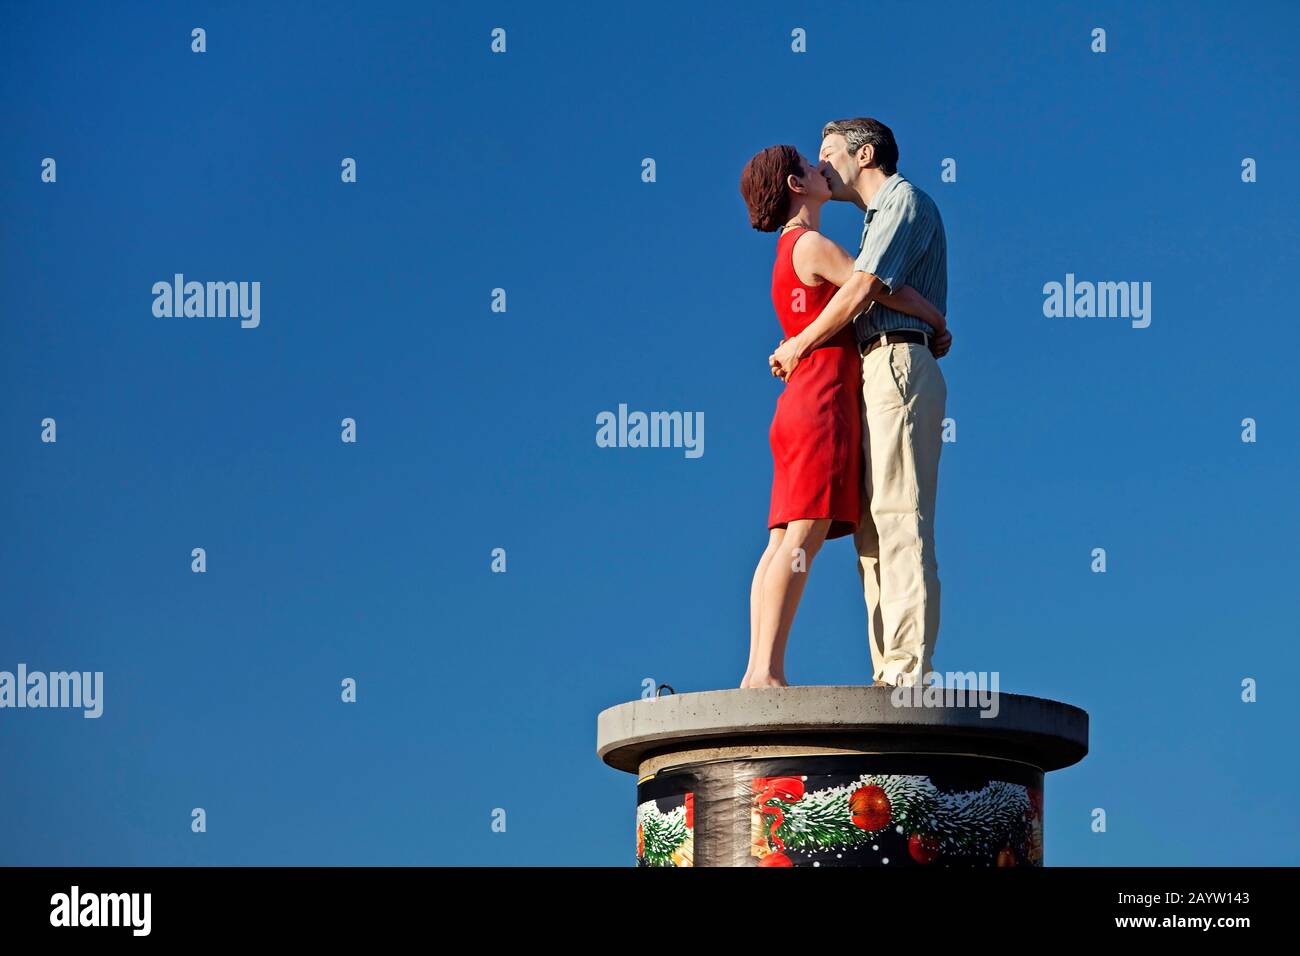 stylite kissing couple II on the top of an advertising column, Germany, North Rhine-Westphalia, Lower Rhine, Dusseldorf Stock Photo